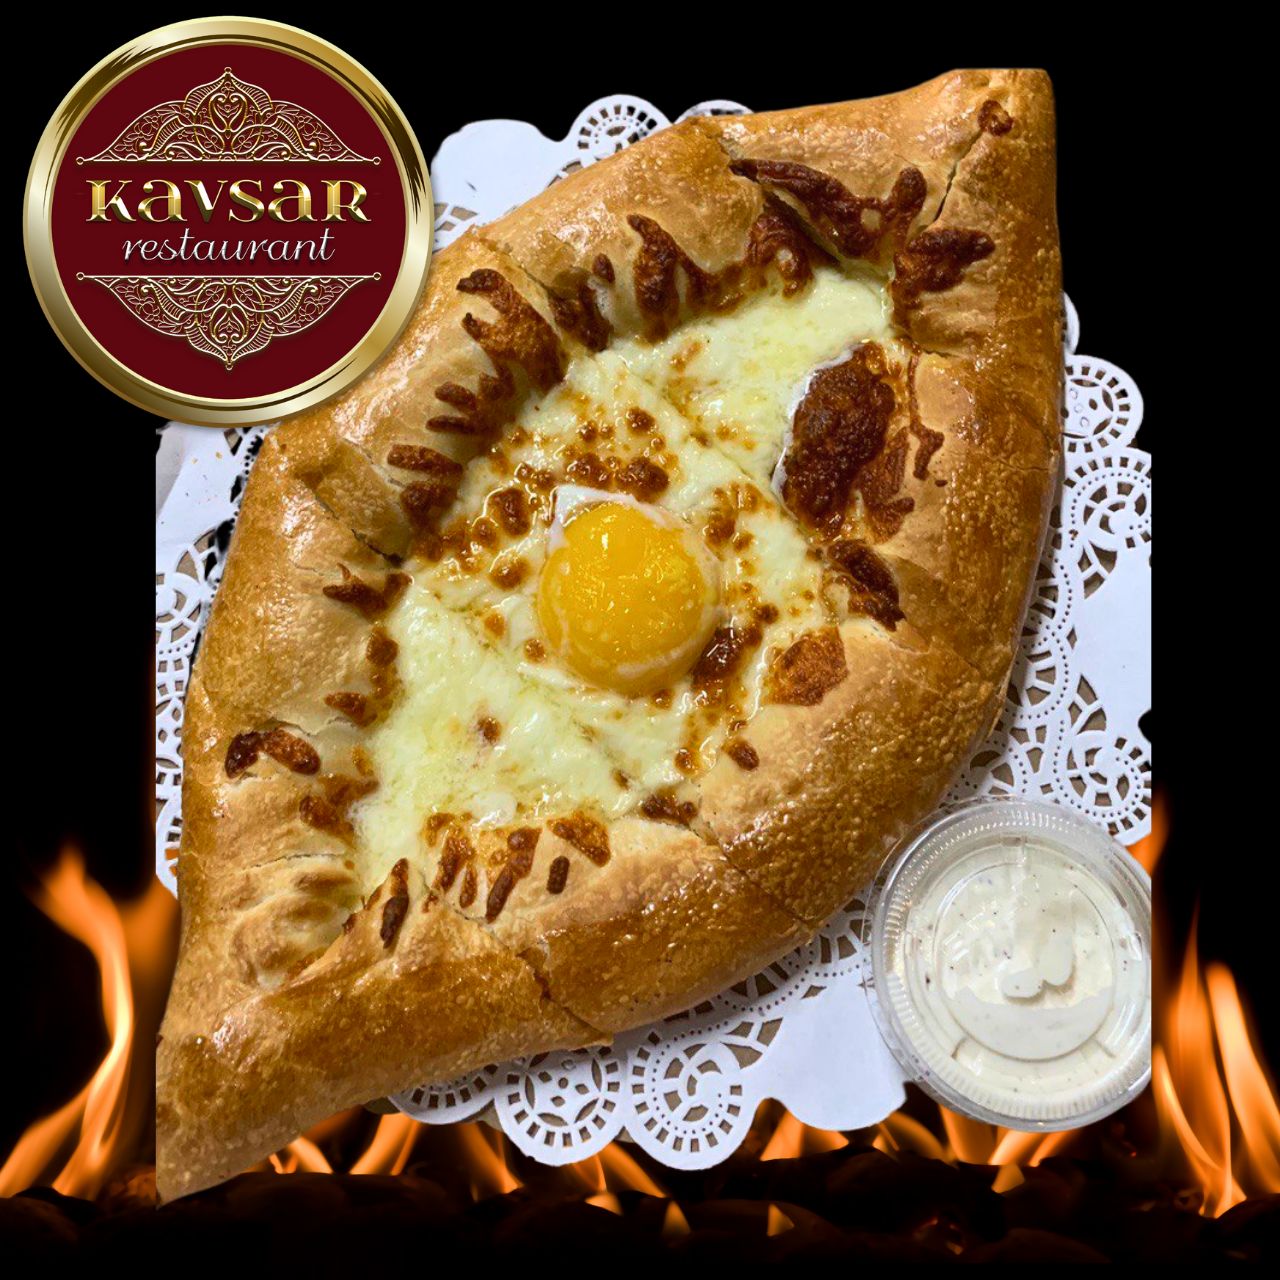 Kavsar boat cheese/egg